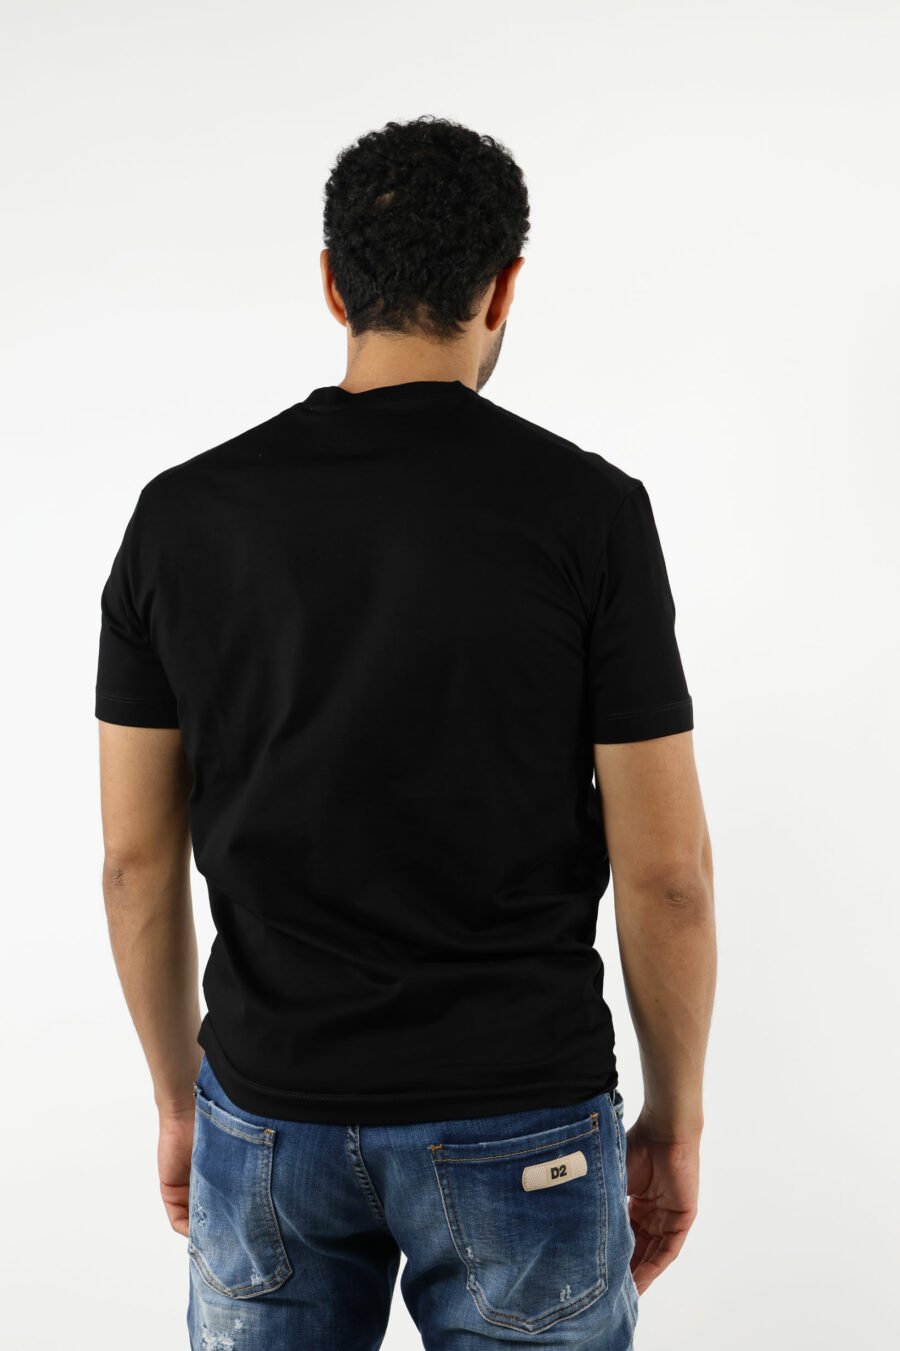 Schwarzes T-Shirt mit mehrfarbigem Retro-Maxilogo - 111203